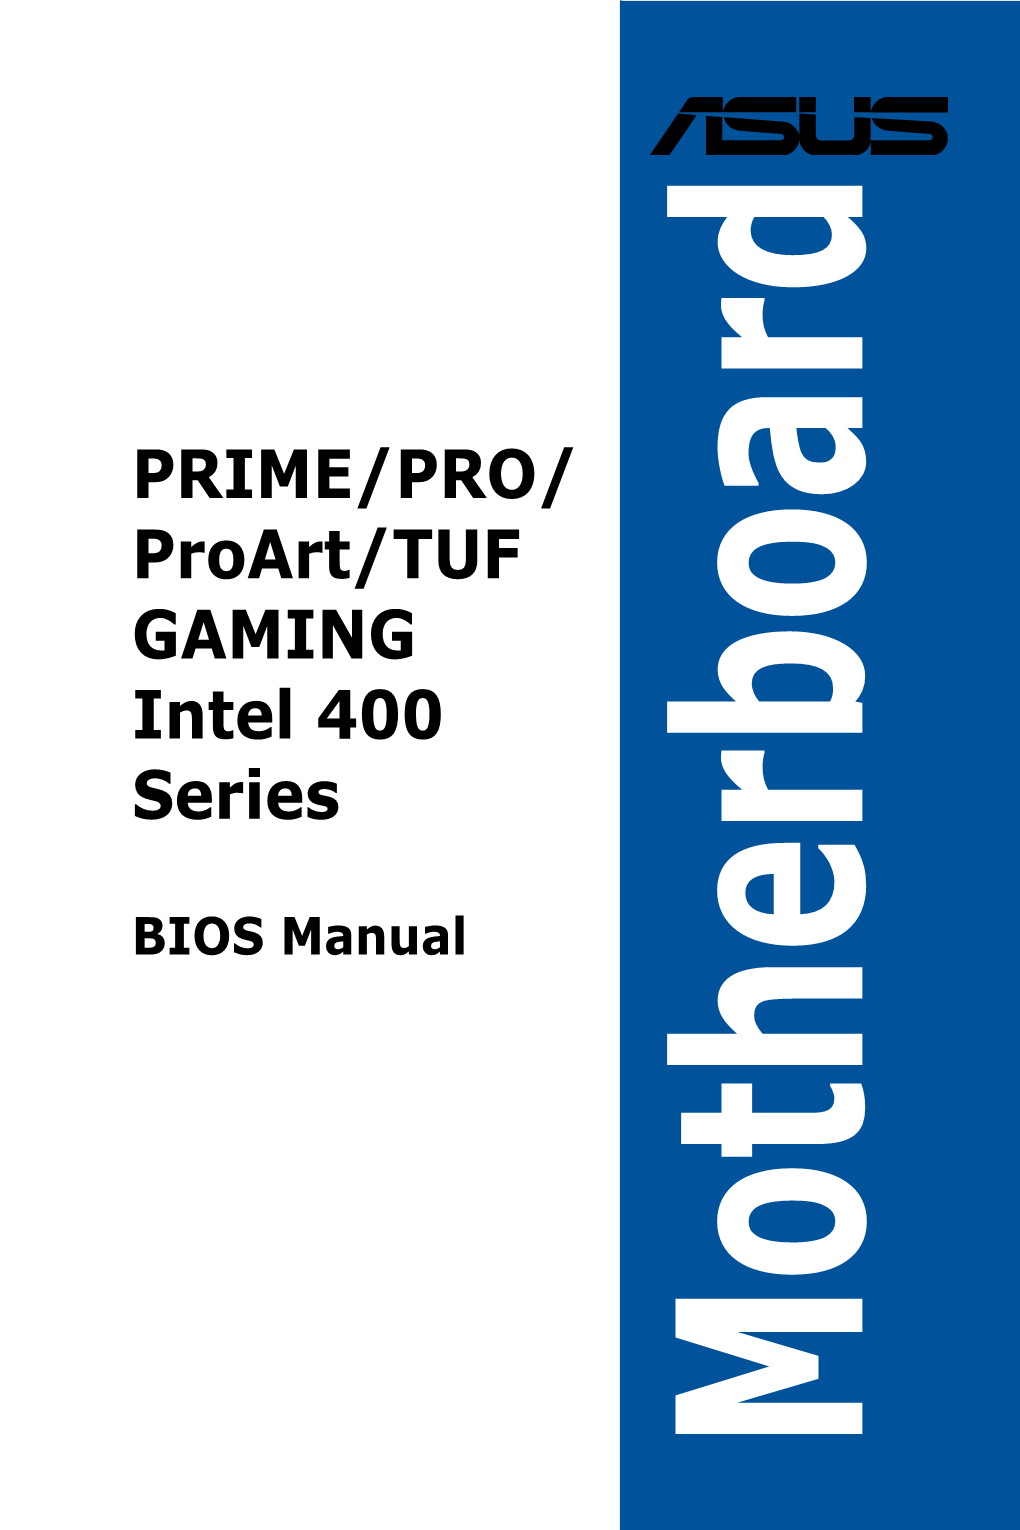 PRIME/PRO/ Proart/TUF GAMING Intel 400 Series